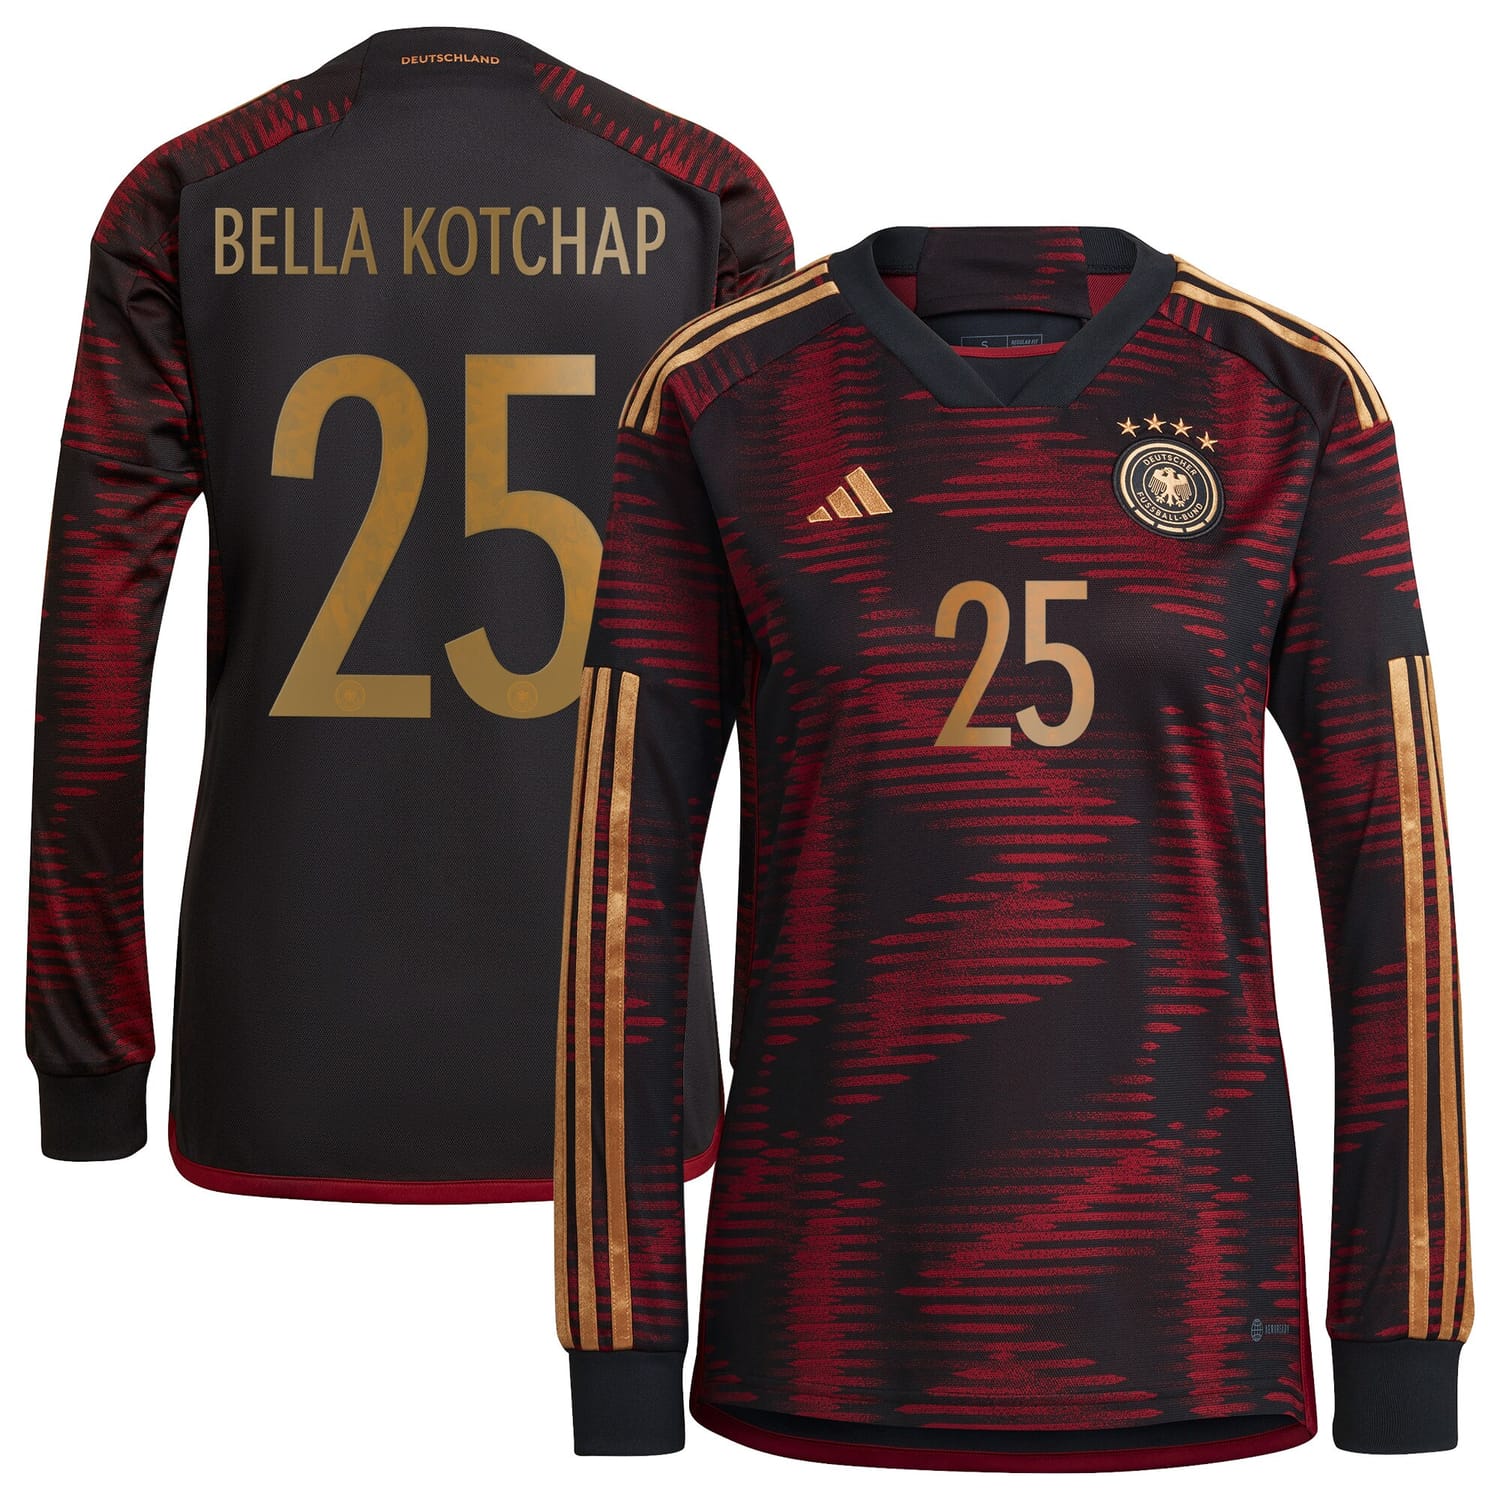 Germany National Team Away Jersey Shirt Long Sleeve 2022 player Armel Bella-Kotchap 25 printing for Women